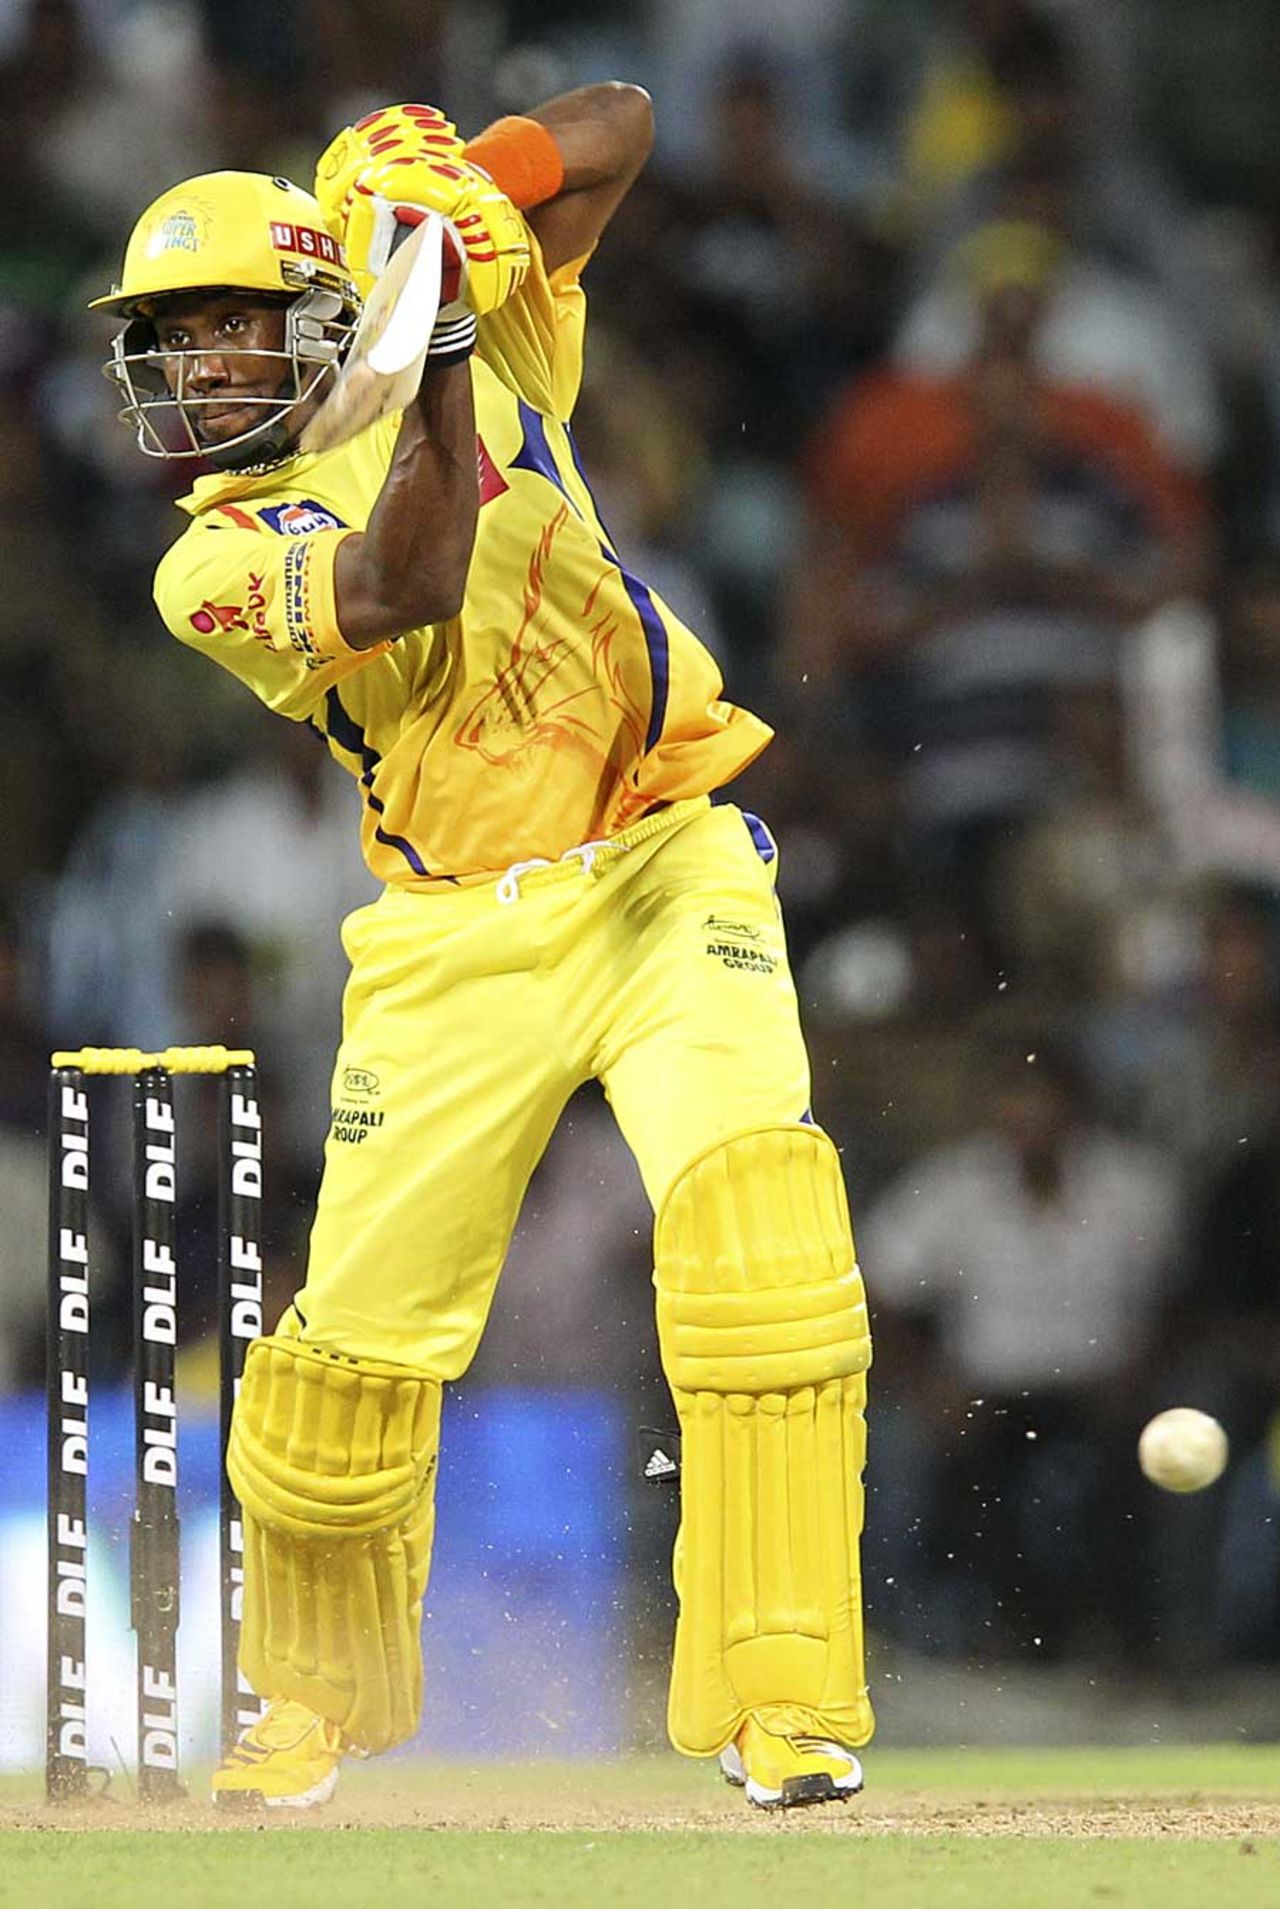 Dwayne Bravo made 25, Chennai Super Kings v Royal Challengers Bangalore, IPL, Chennai, April 12, 2012